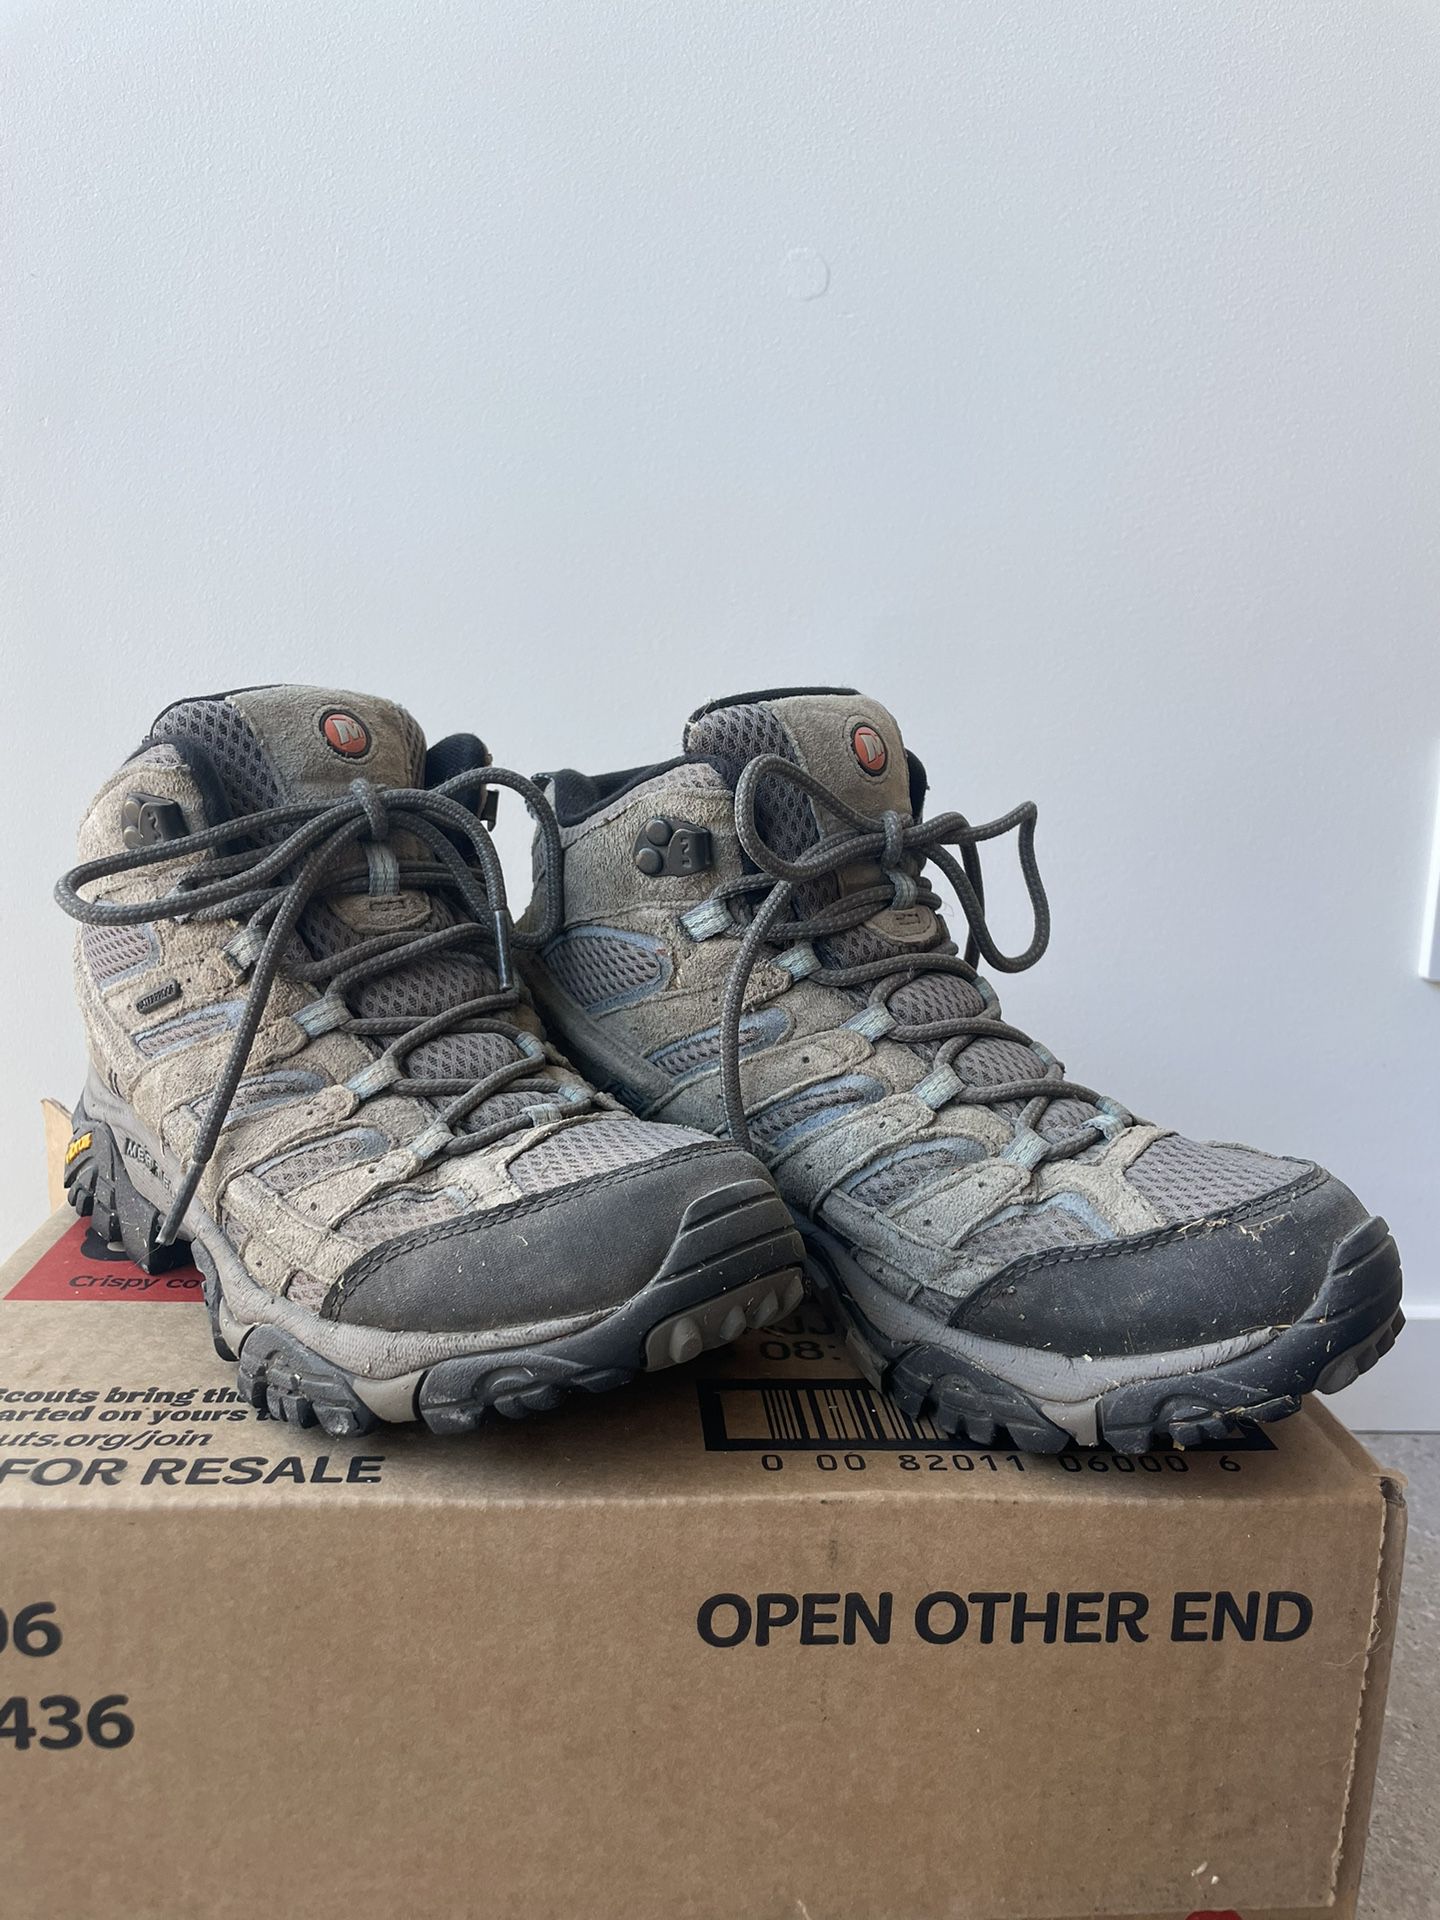 Merrell Vibram Women’s Hiking Boots